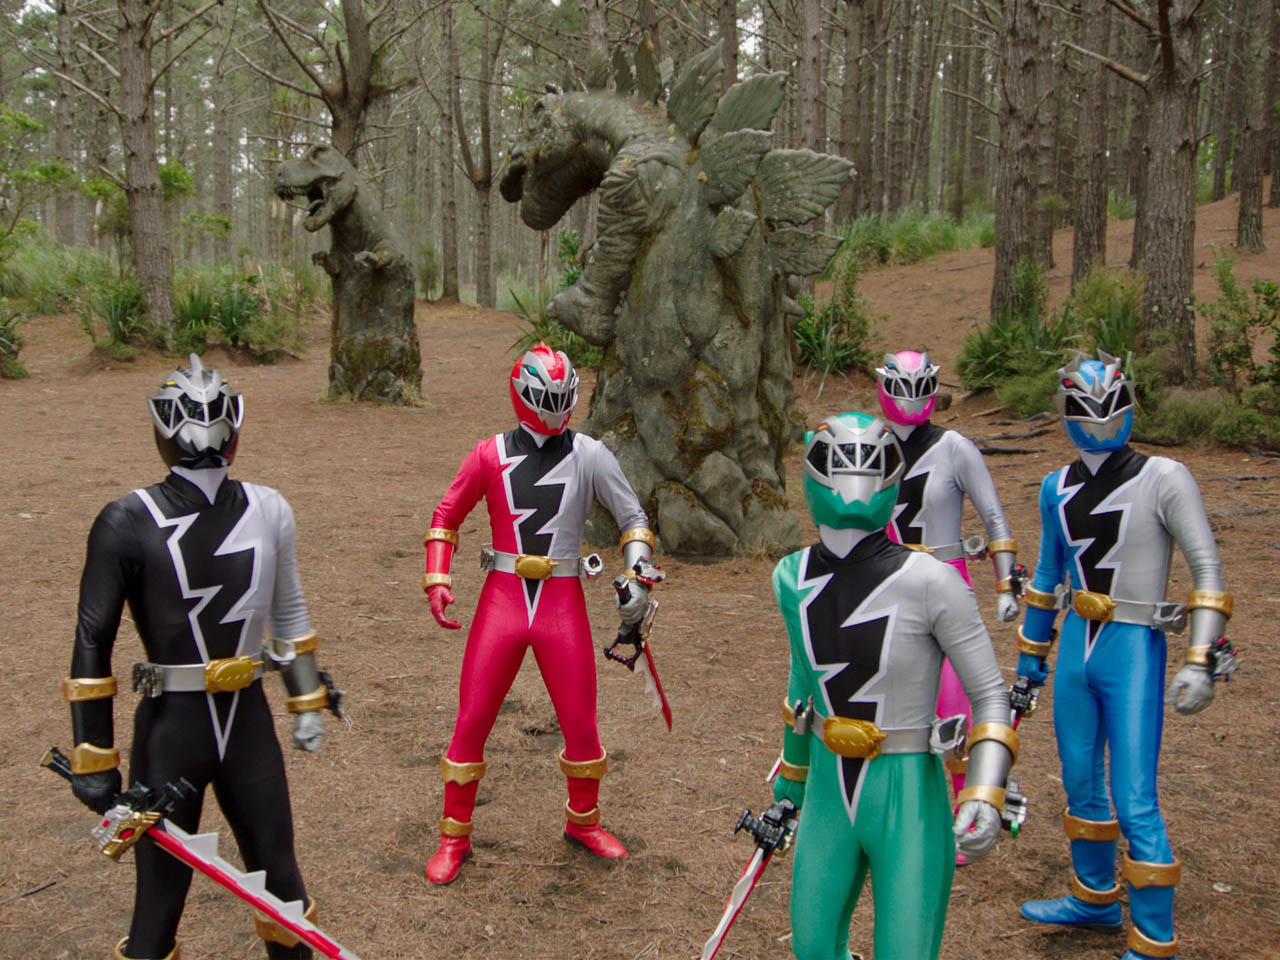 NickALive!: Netflix to Add First Half of 'Power Rangers Dino Fury' Season 1  on Tuesday, June 15